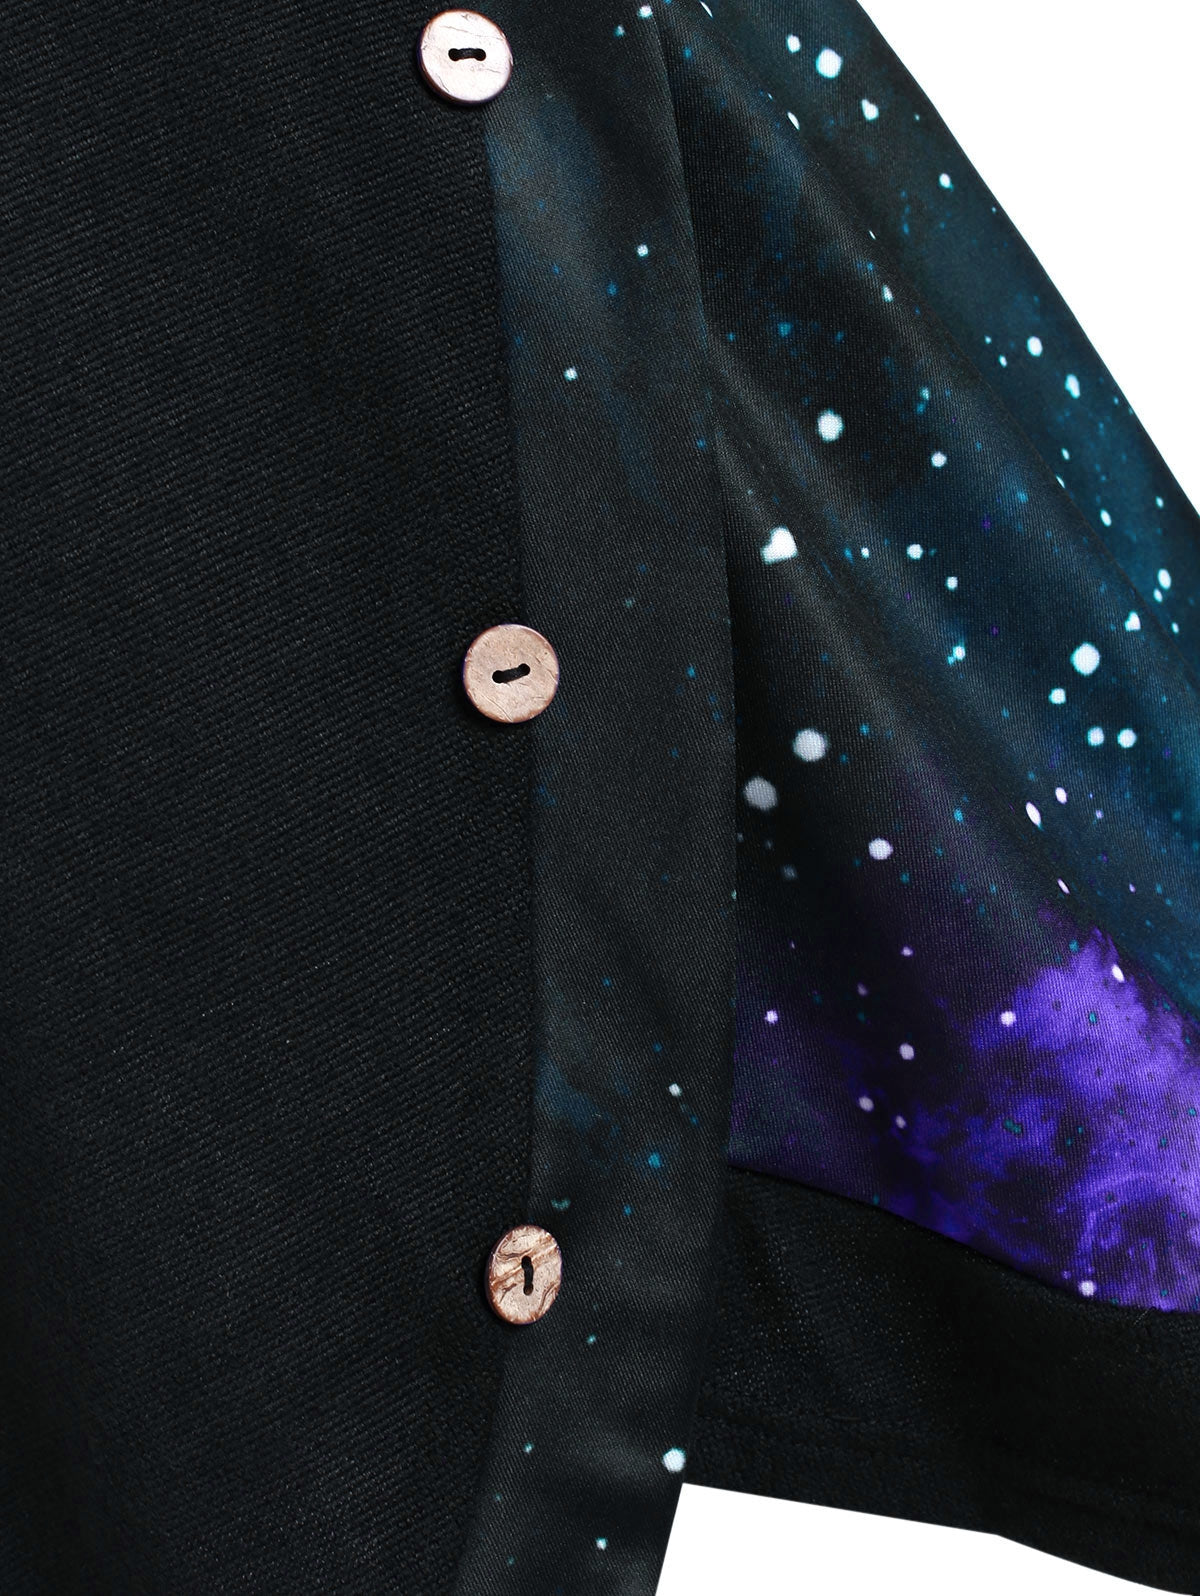 Cowl Neck Galaxy Print Panel Tunic Sweater